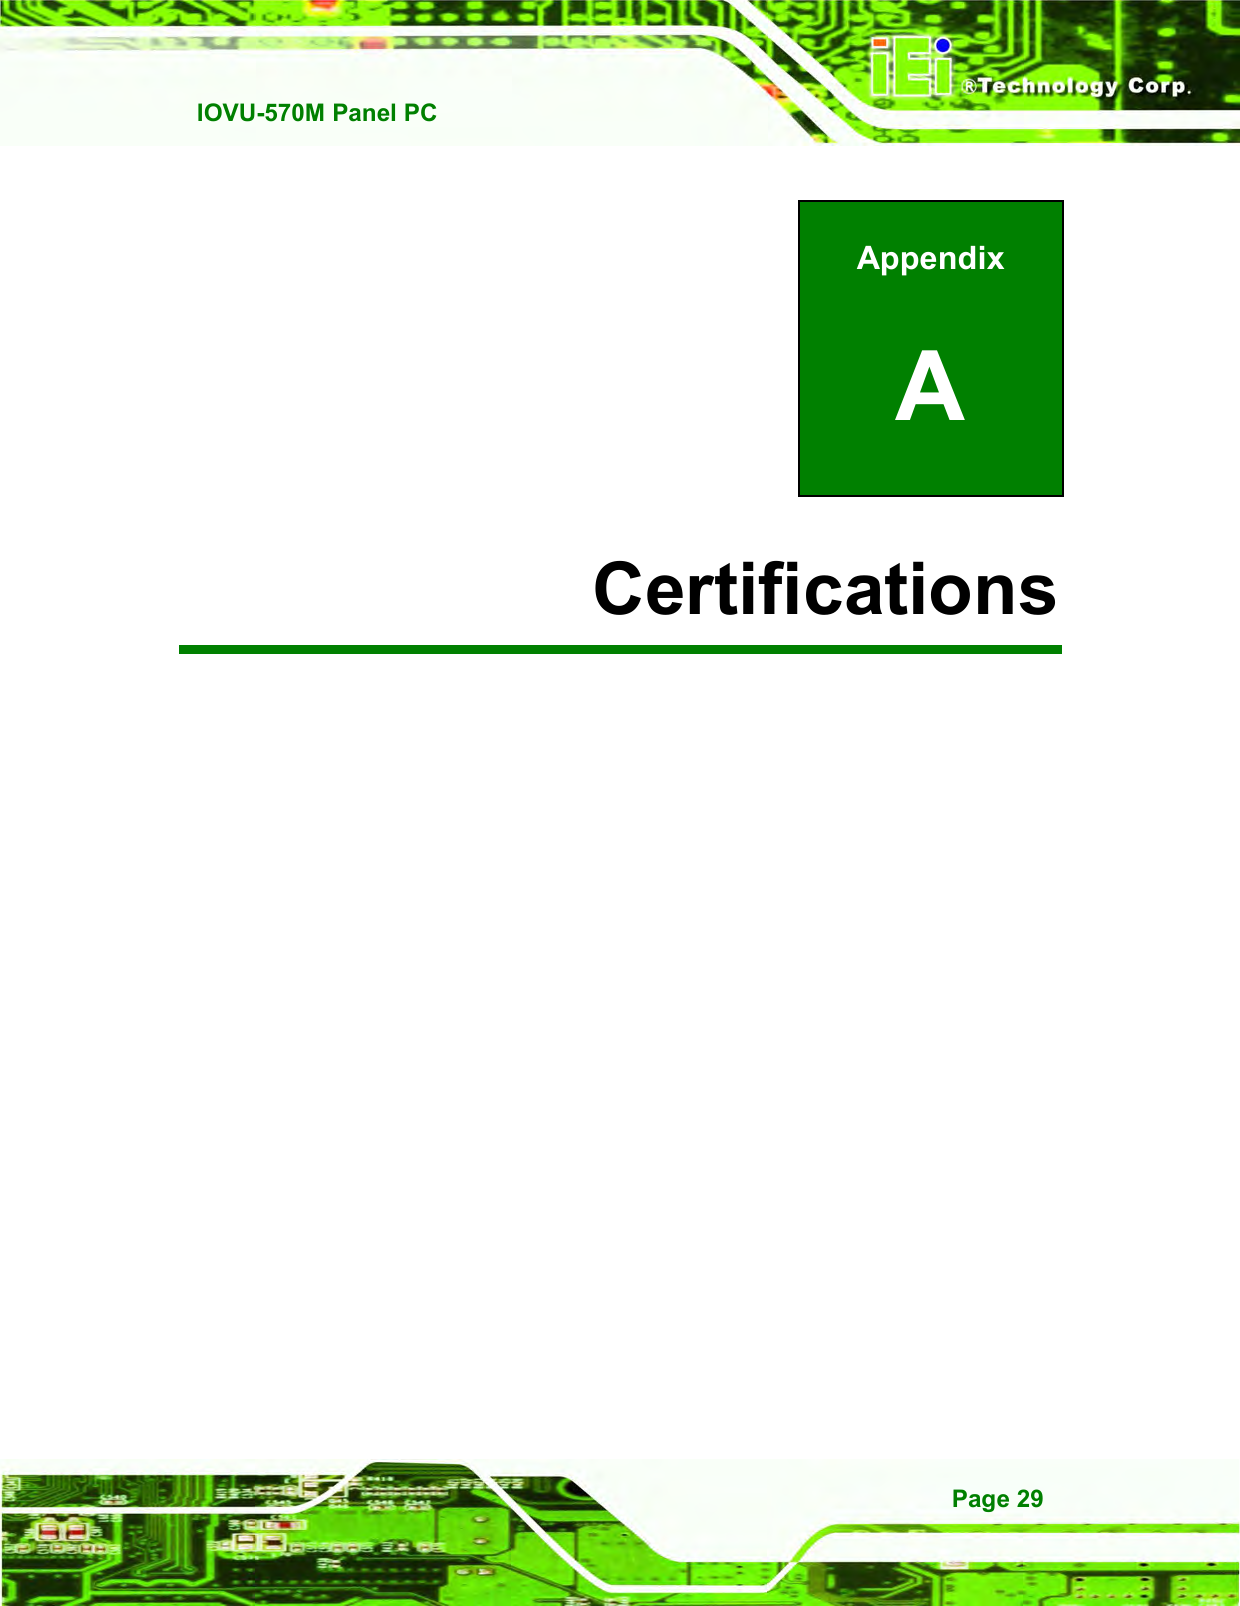   IOVU-570M Panel PC Page 29 Appendix A A Certifications 